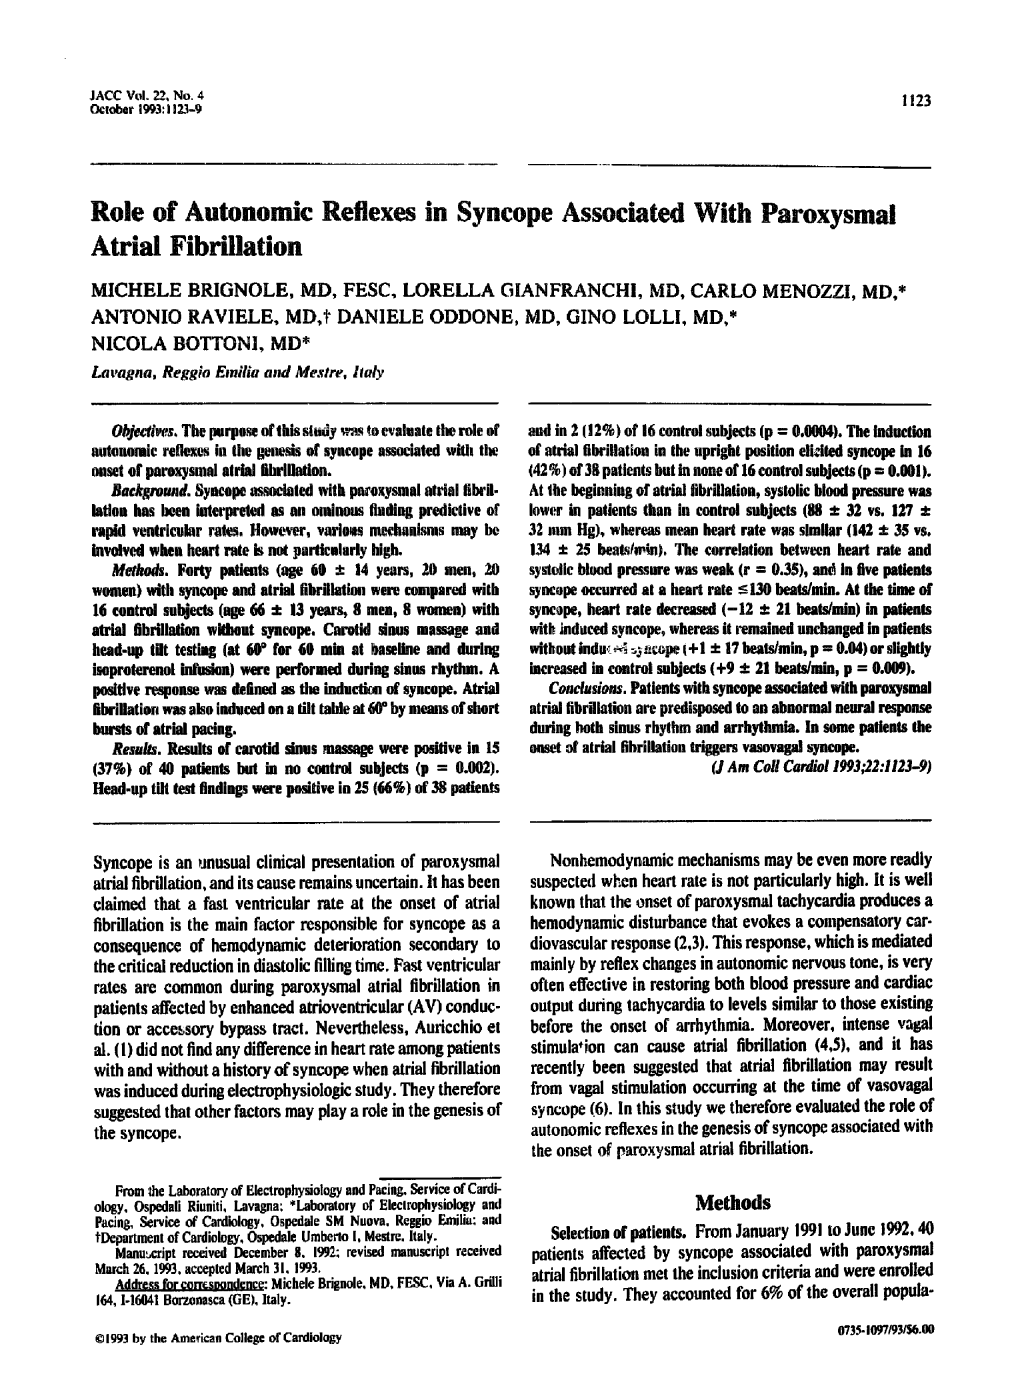 Role of Autonomic Reflexes in Syncope Associated with Paroxysmal Atrial Fibrillation